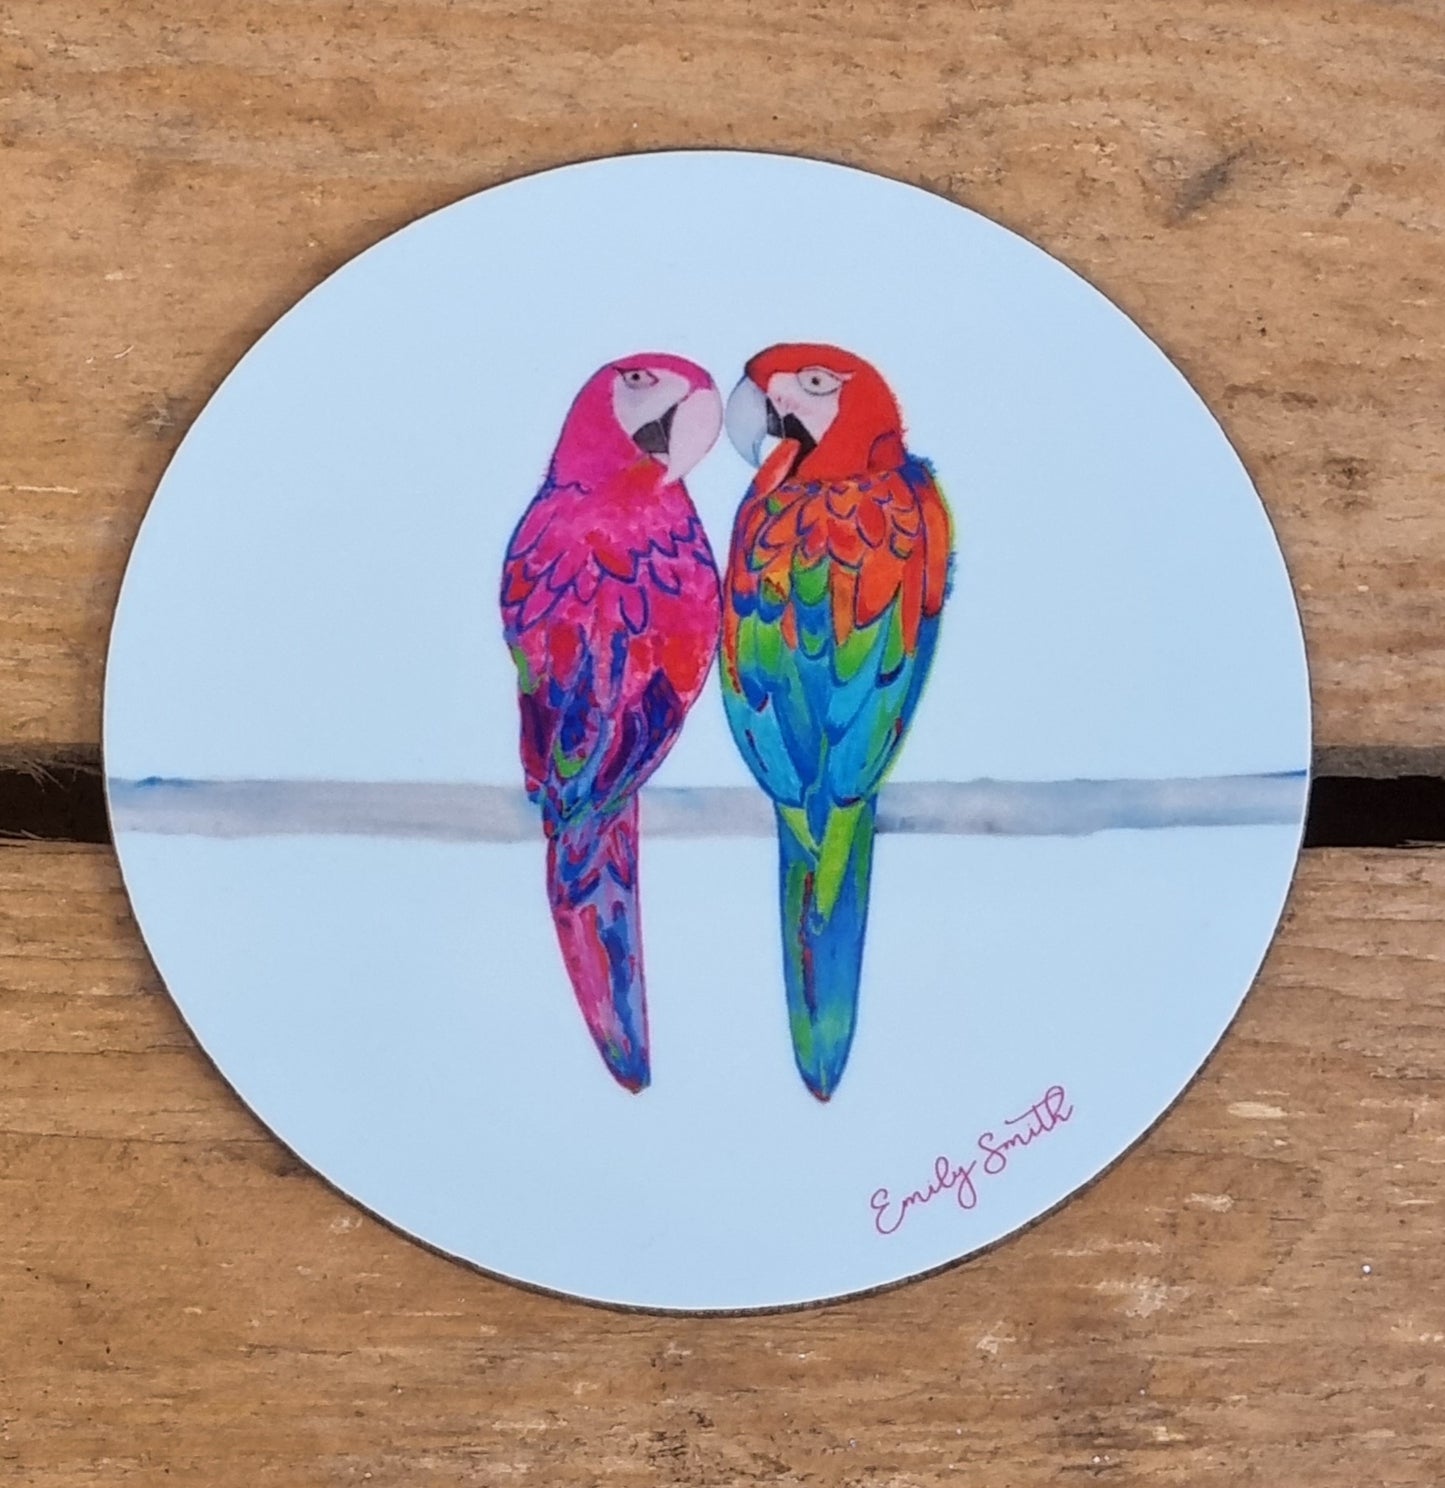 Two Parrots Coaster